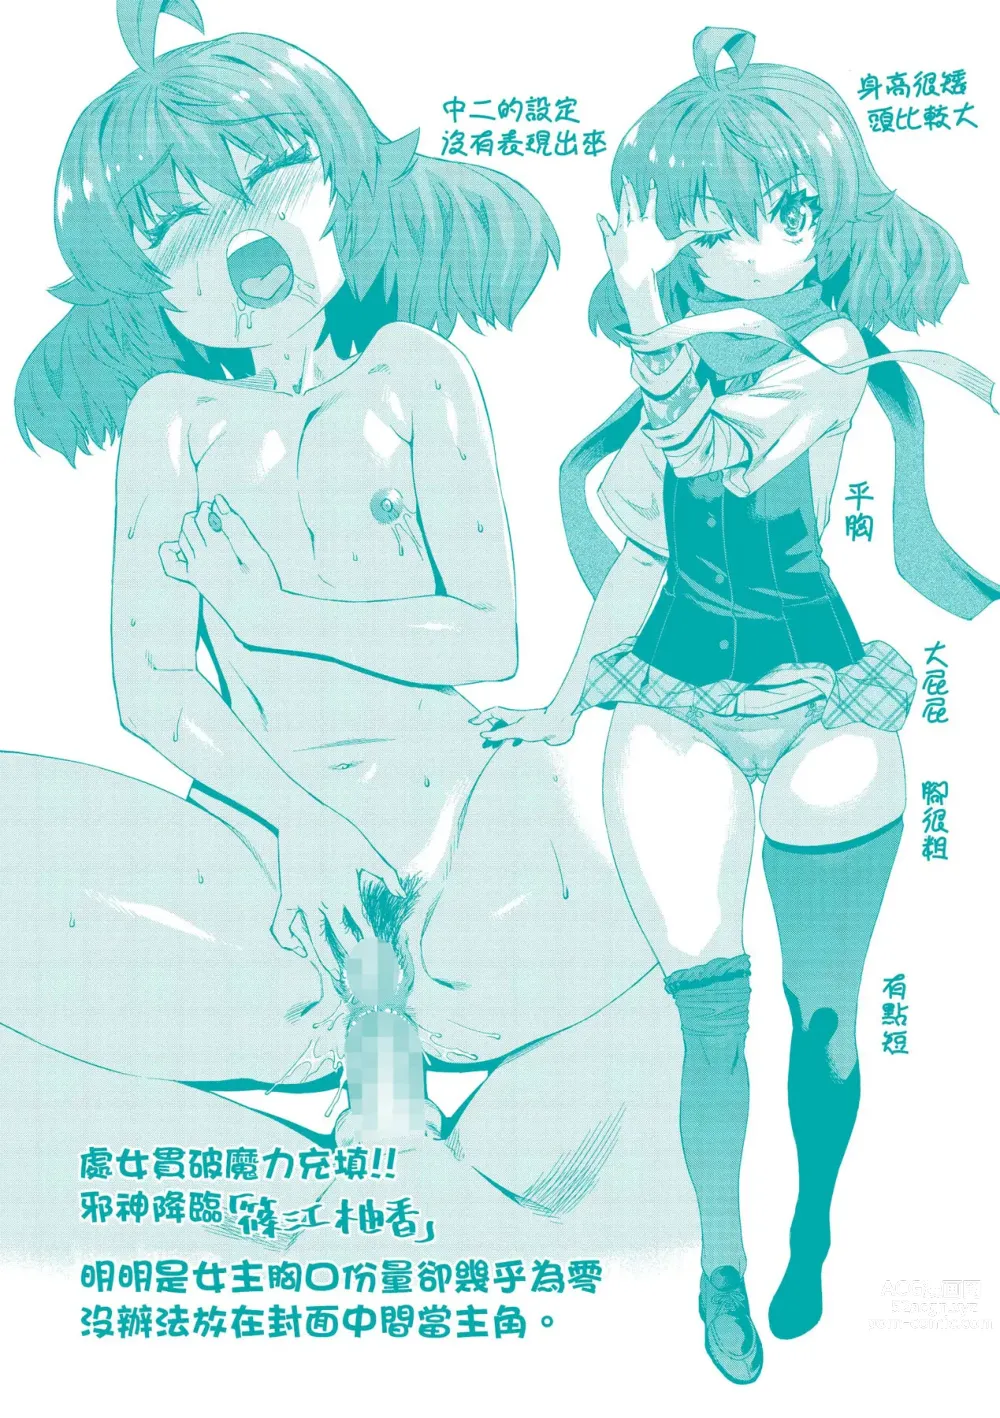 Page 203 of manga 用邪眼的催眠淫力讓學生會百合女子們從處女強制畢業!! (decensored)